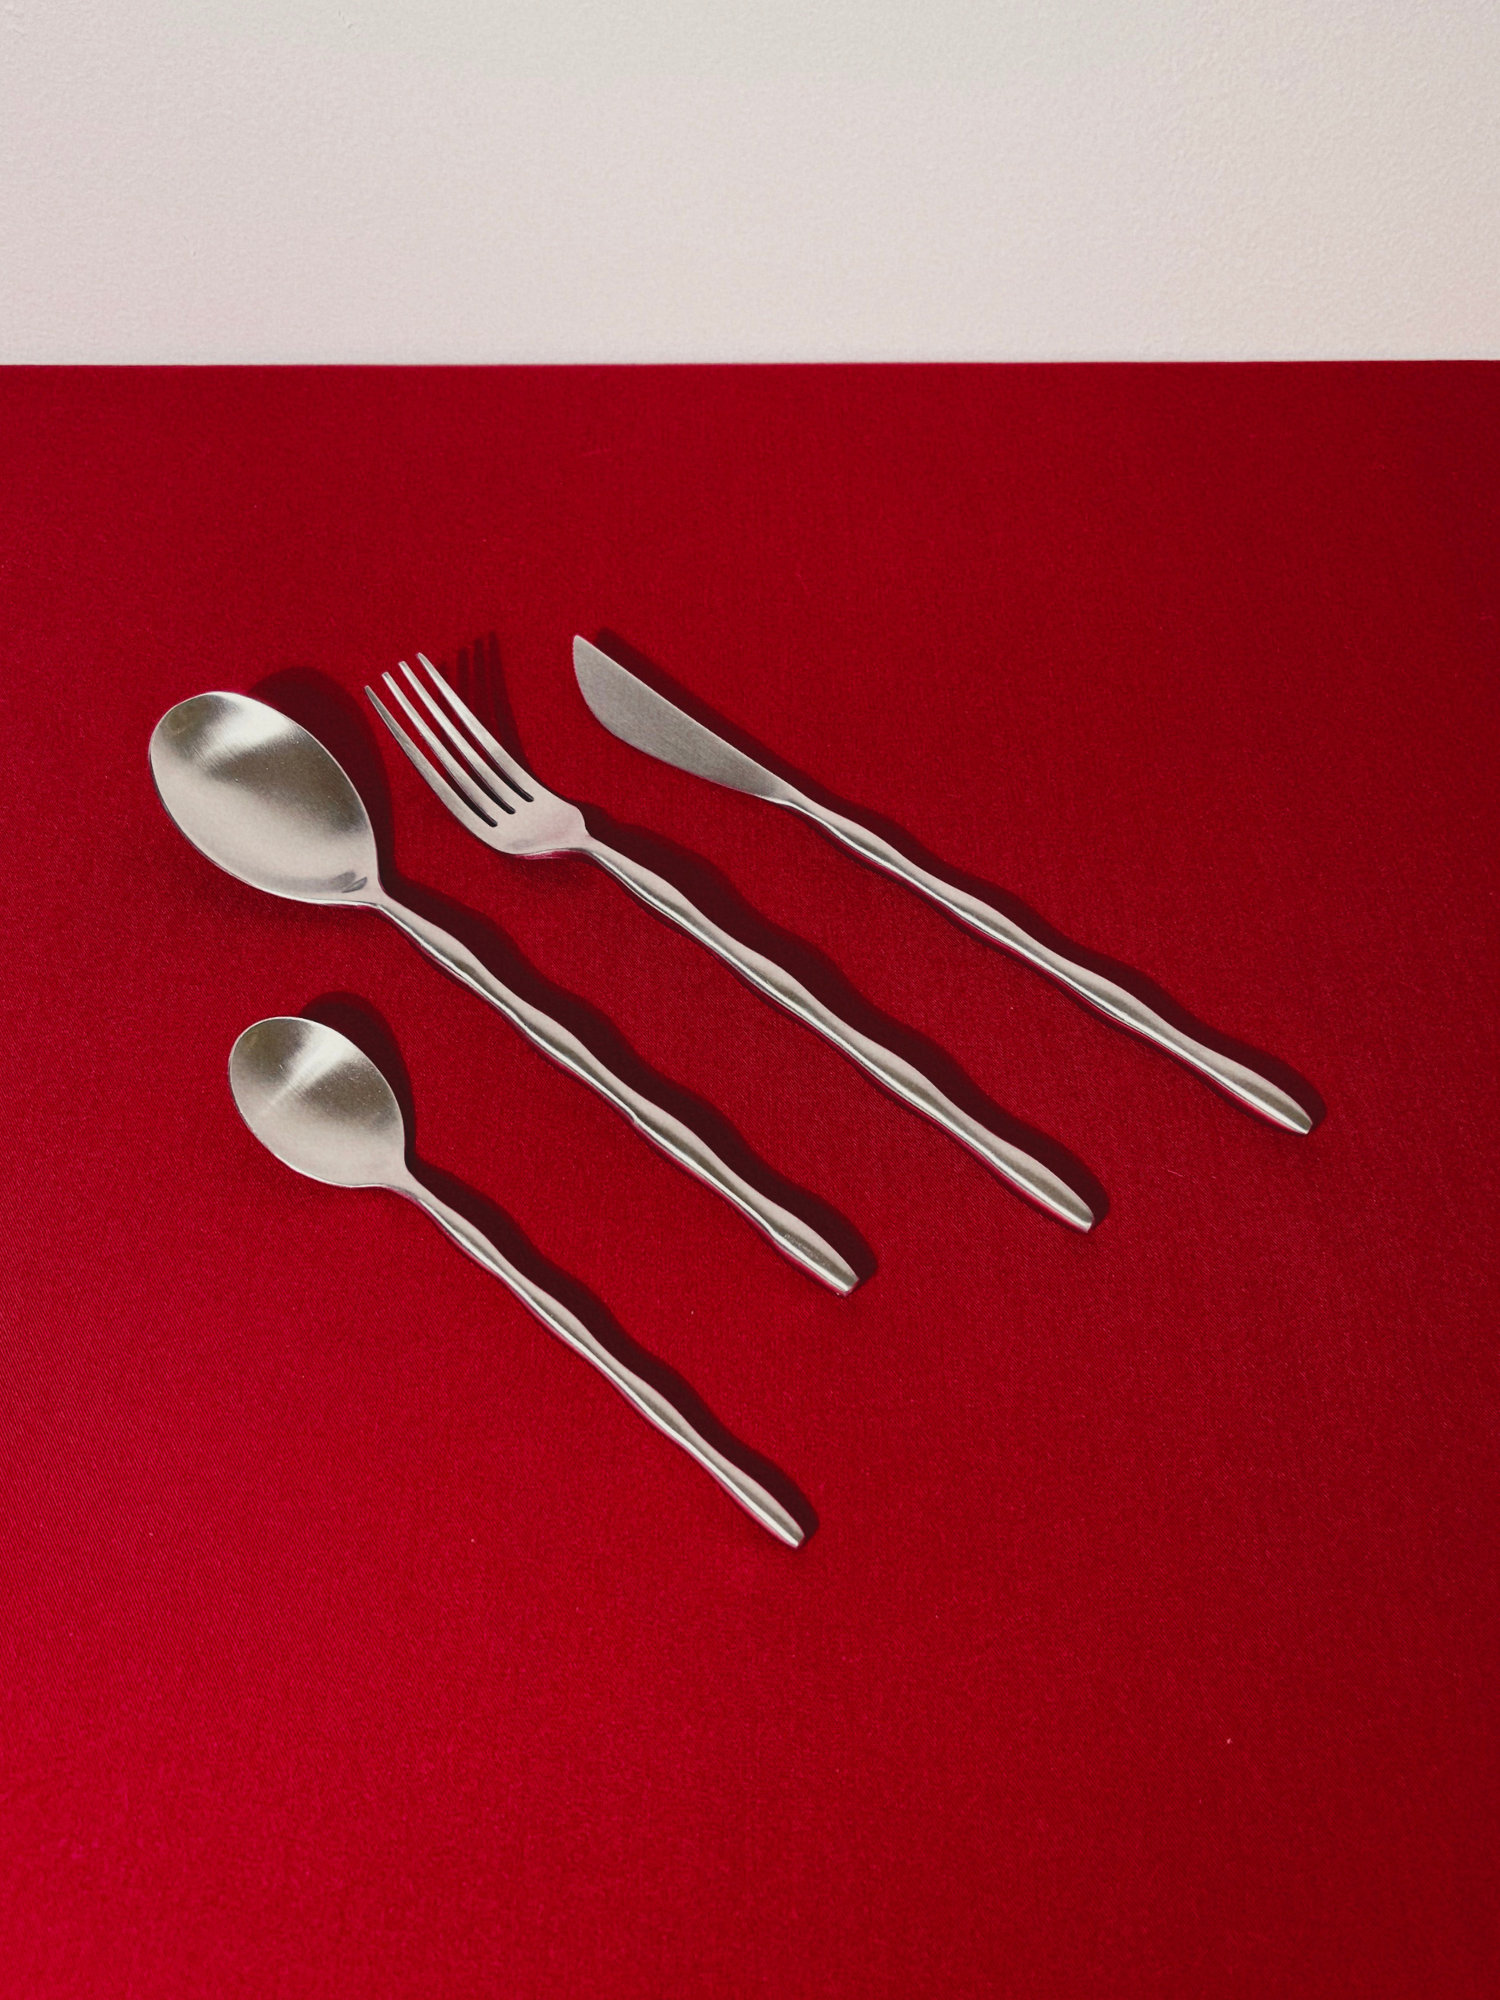 META Curve Cutlery - Brushed Silver